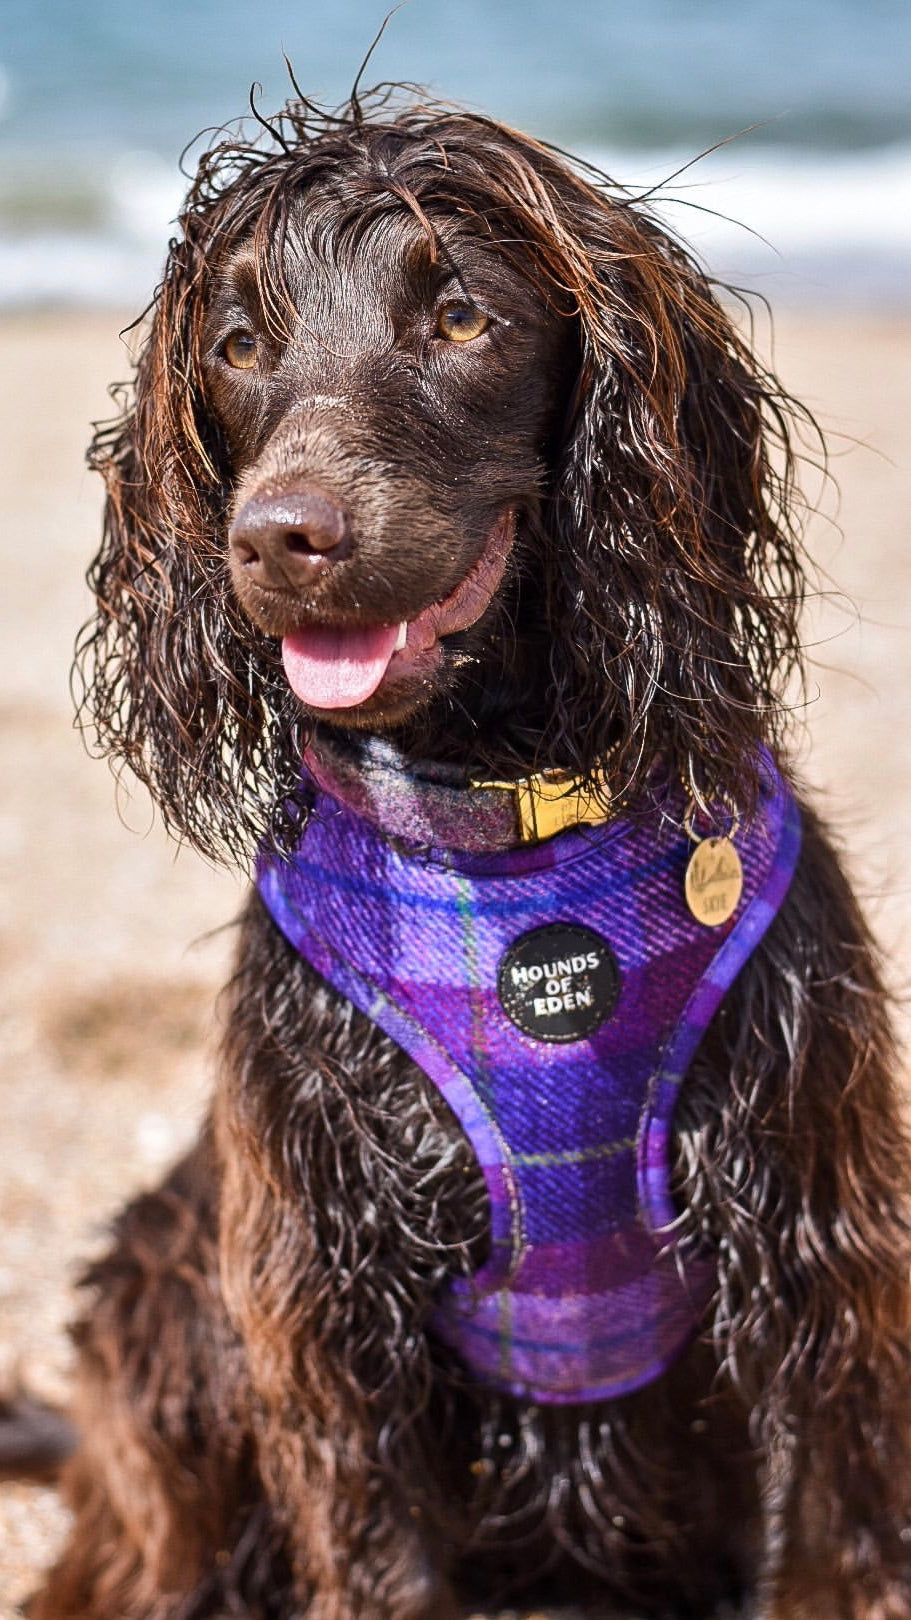 'Molly' - Pink & Purple Check Dog Harness